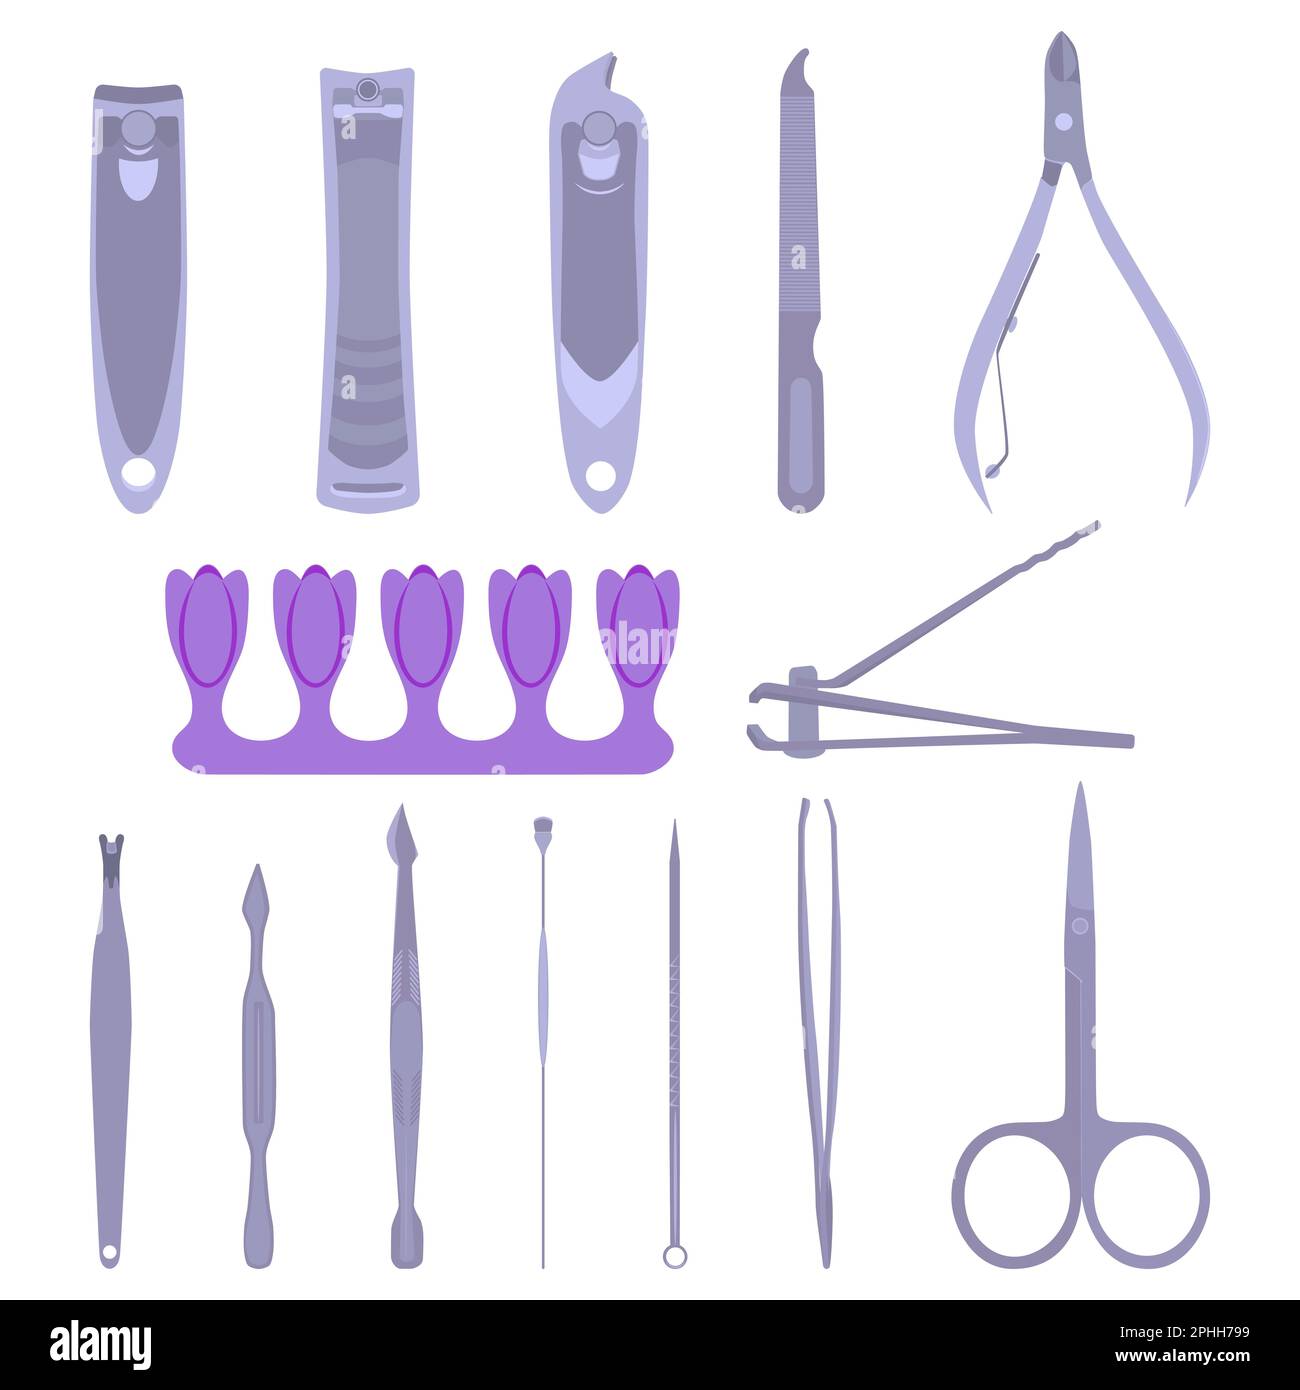 images of pedicures | pedicure tools manicure safety scissors manicure  pedic #images #manicura rusa … | Pedicure tools, Manicure instruments,  Manicure and pedicure